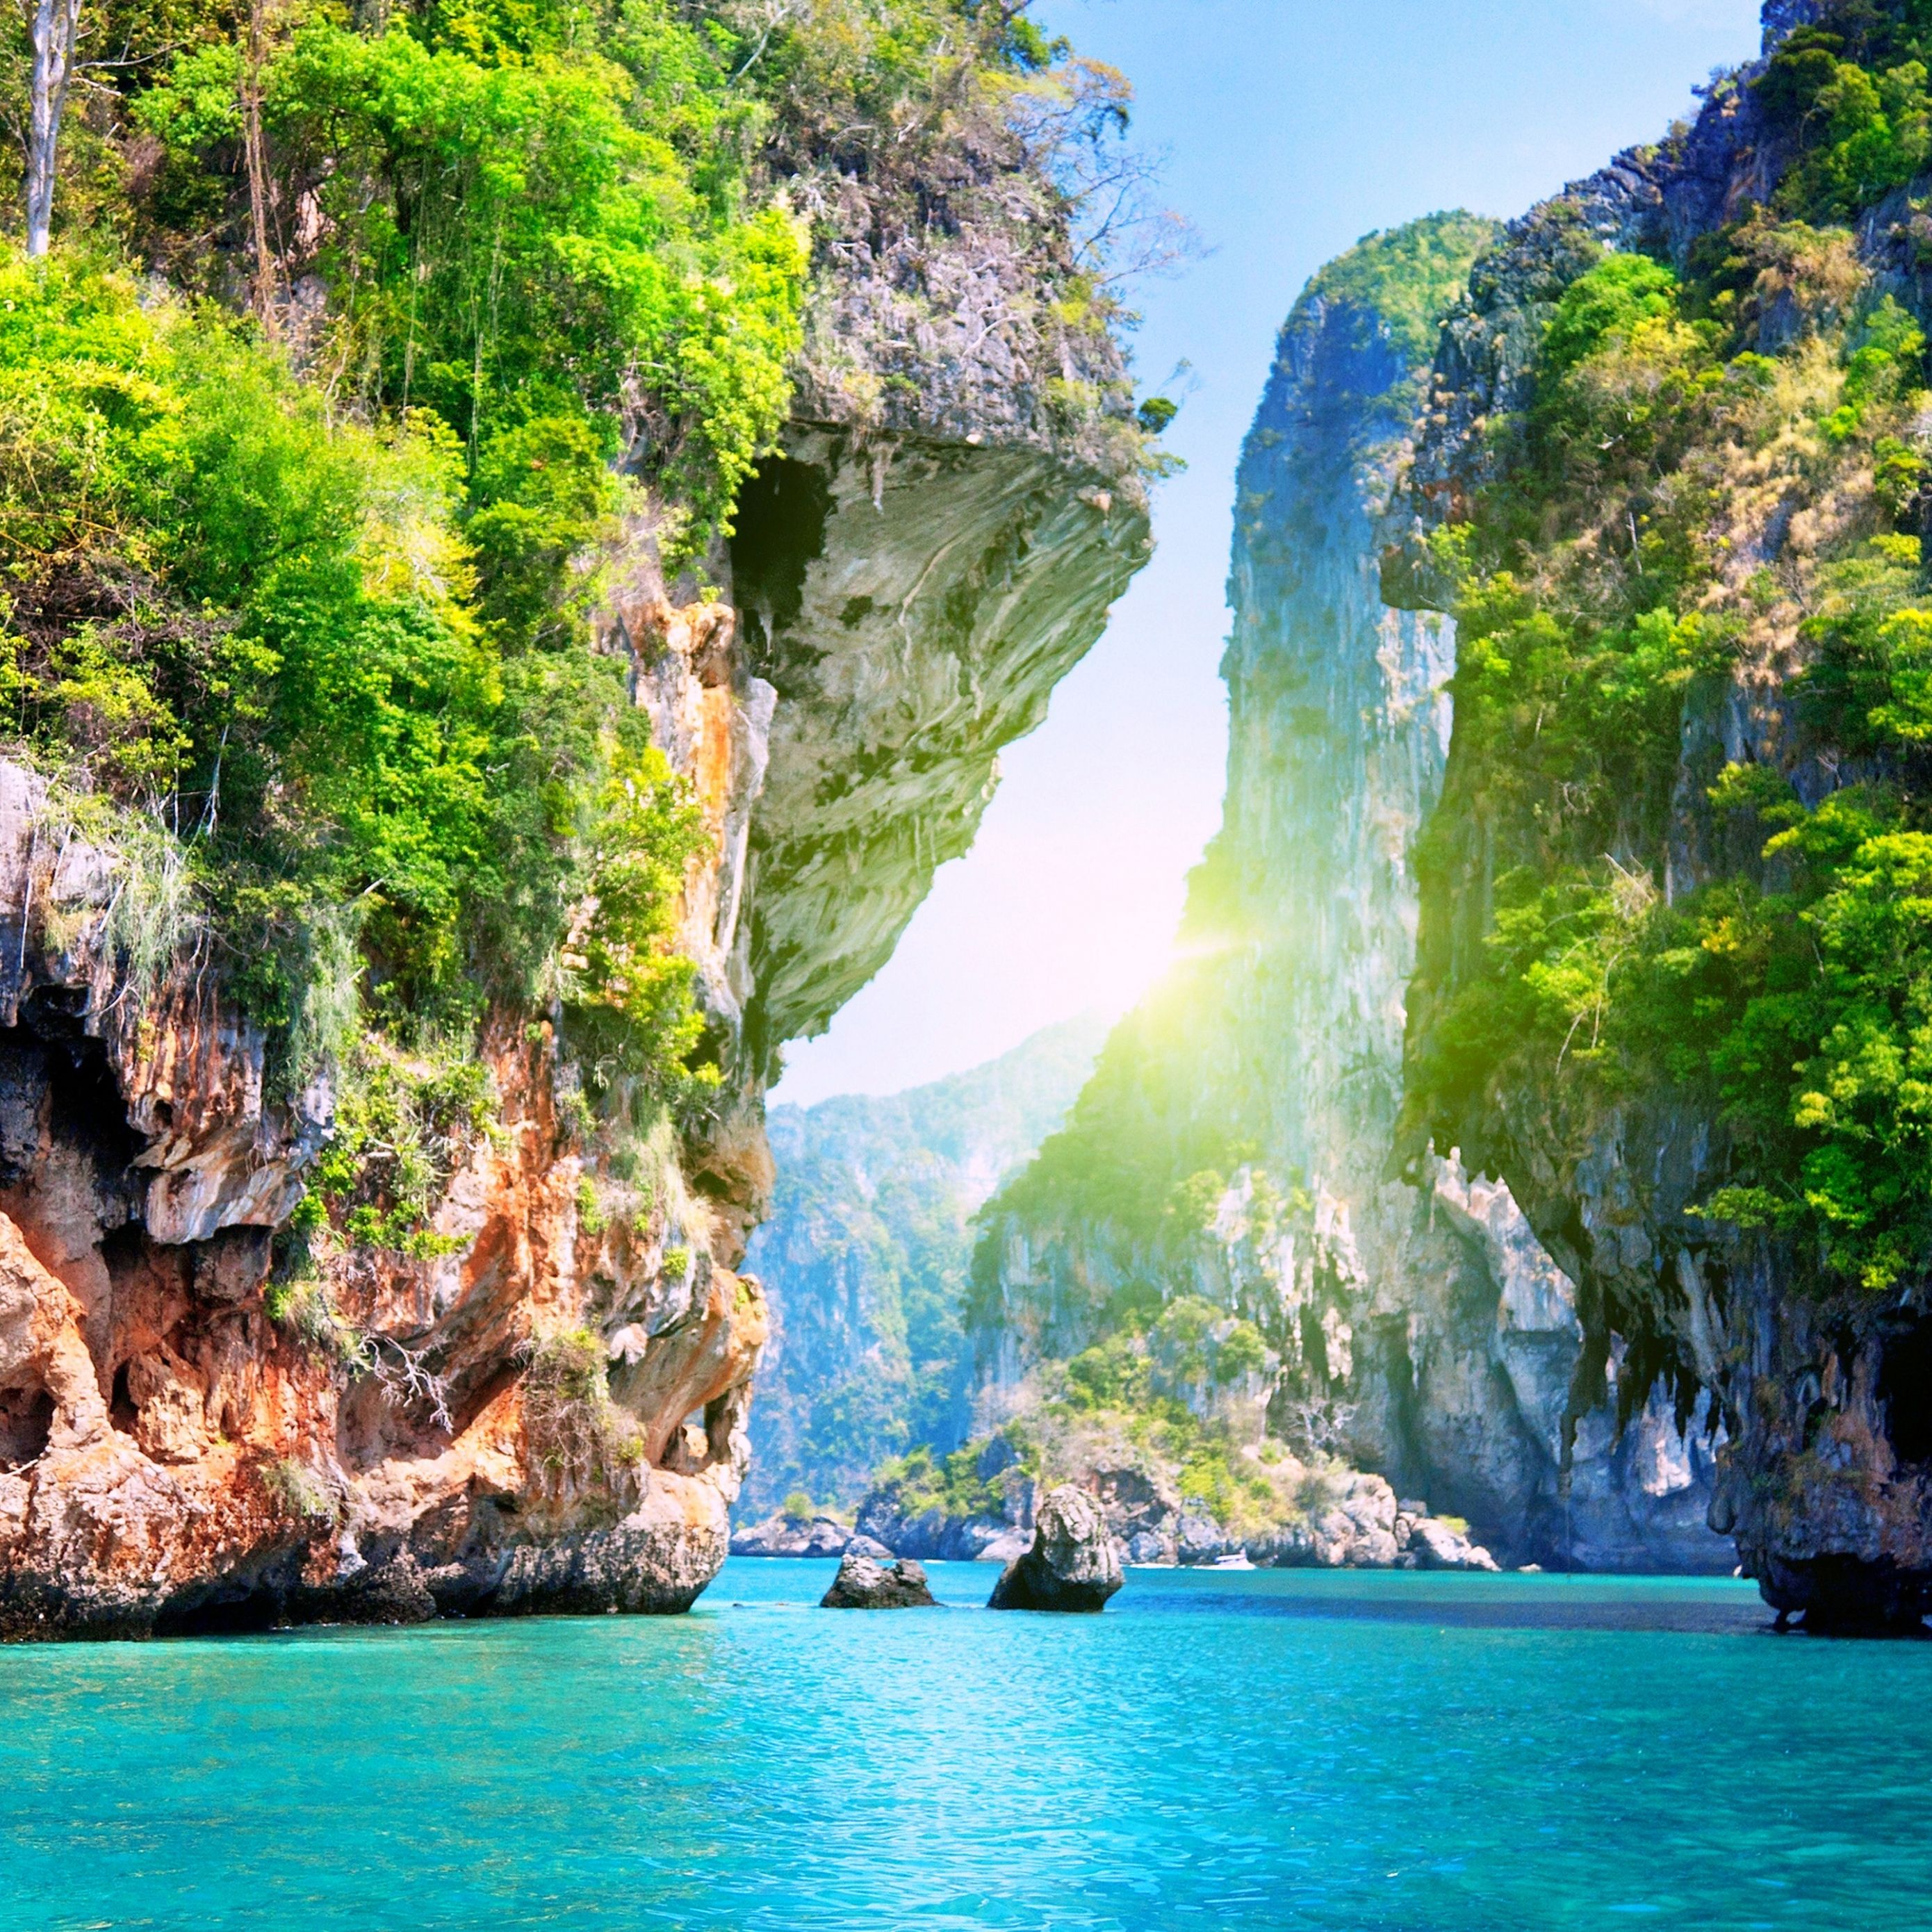 Download Thailand, 5k, 4k wallpaper, 8k, Pattaya, beach, ocean, mountains, World's best diving sites Apple iPad Air wallpaper 2780x2780